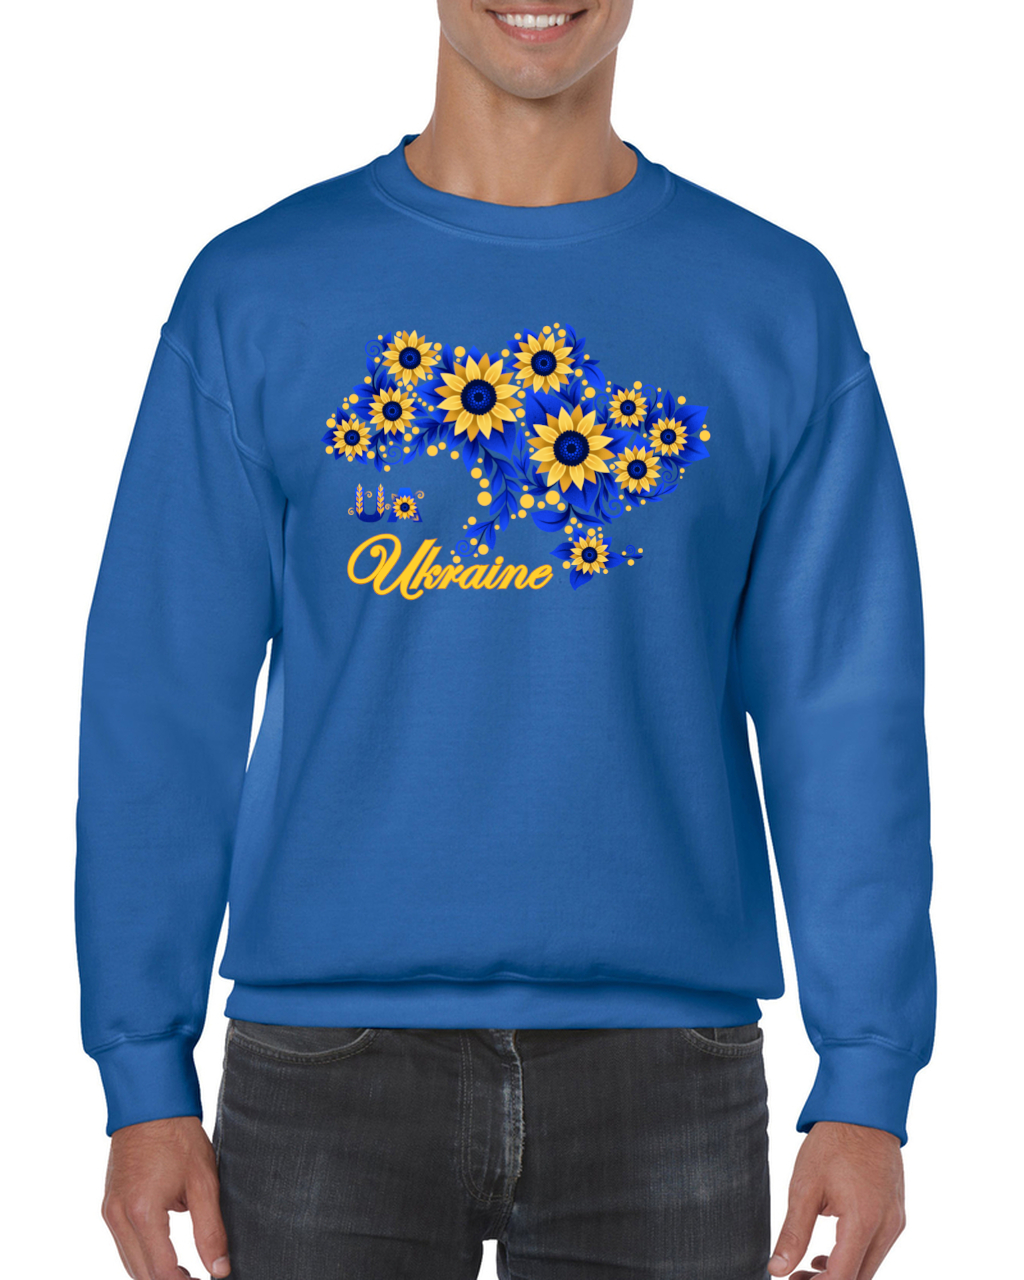 Adult unisex sweatshirt "Sunflower Ukraine"